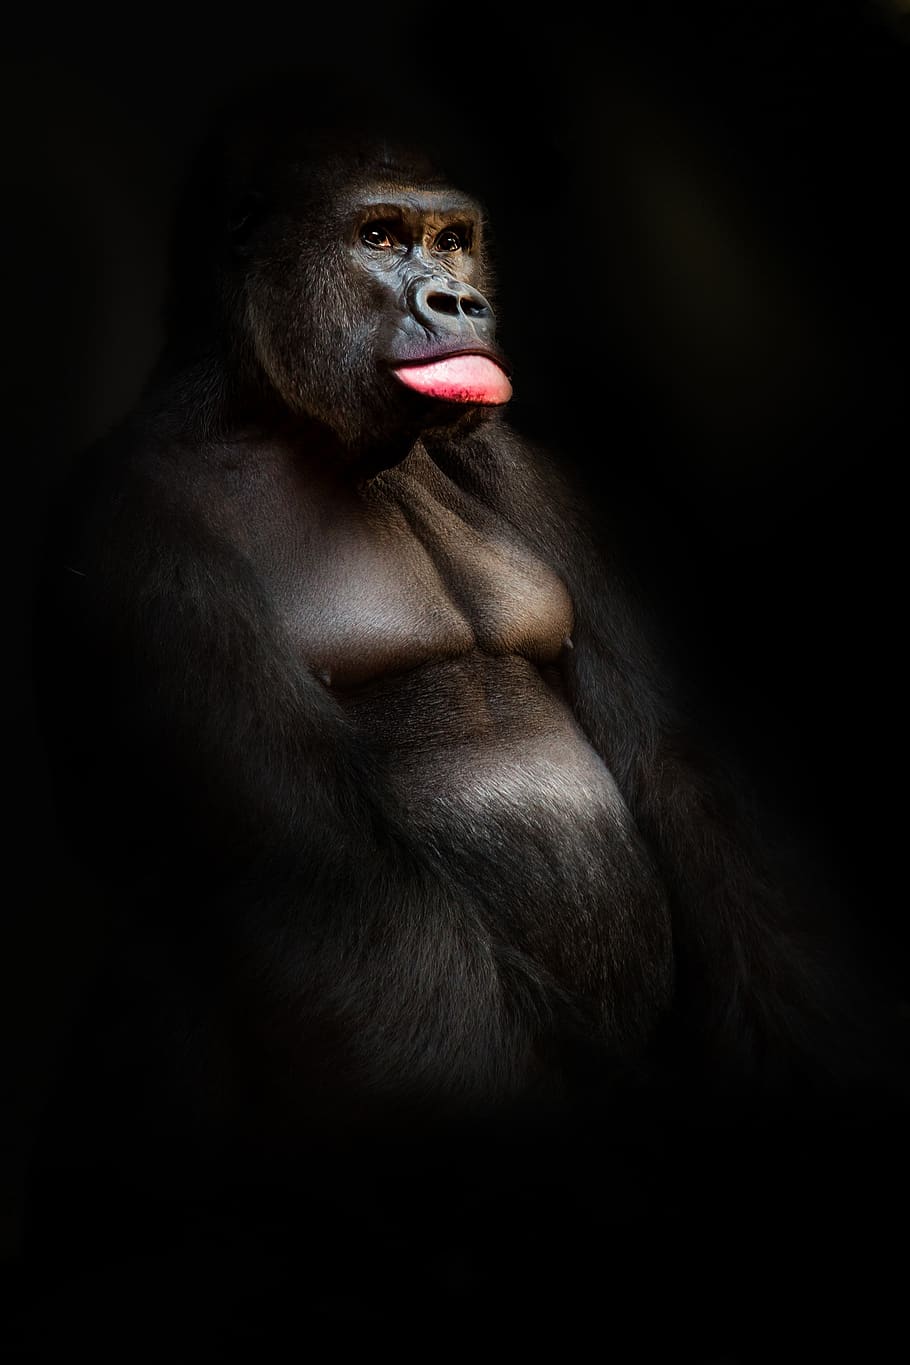 gorilla, monkey, primate, animal, portrait, face, facial expression, low key, mammal, black background